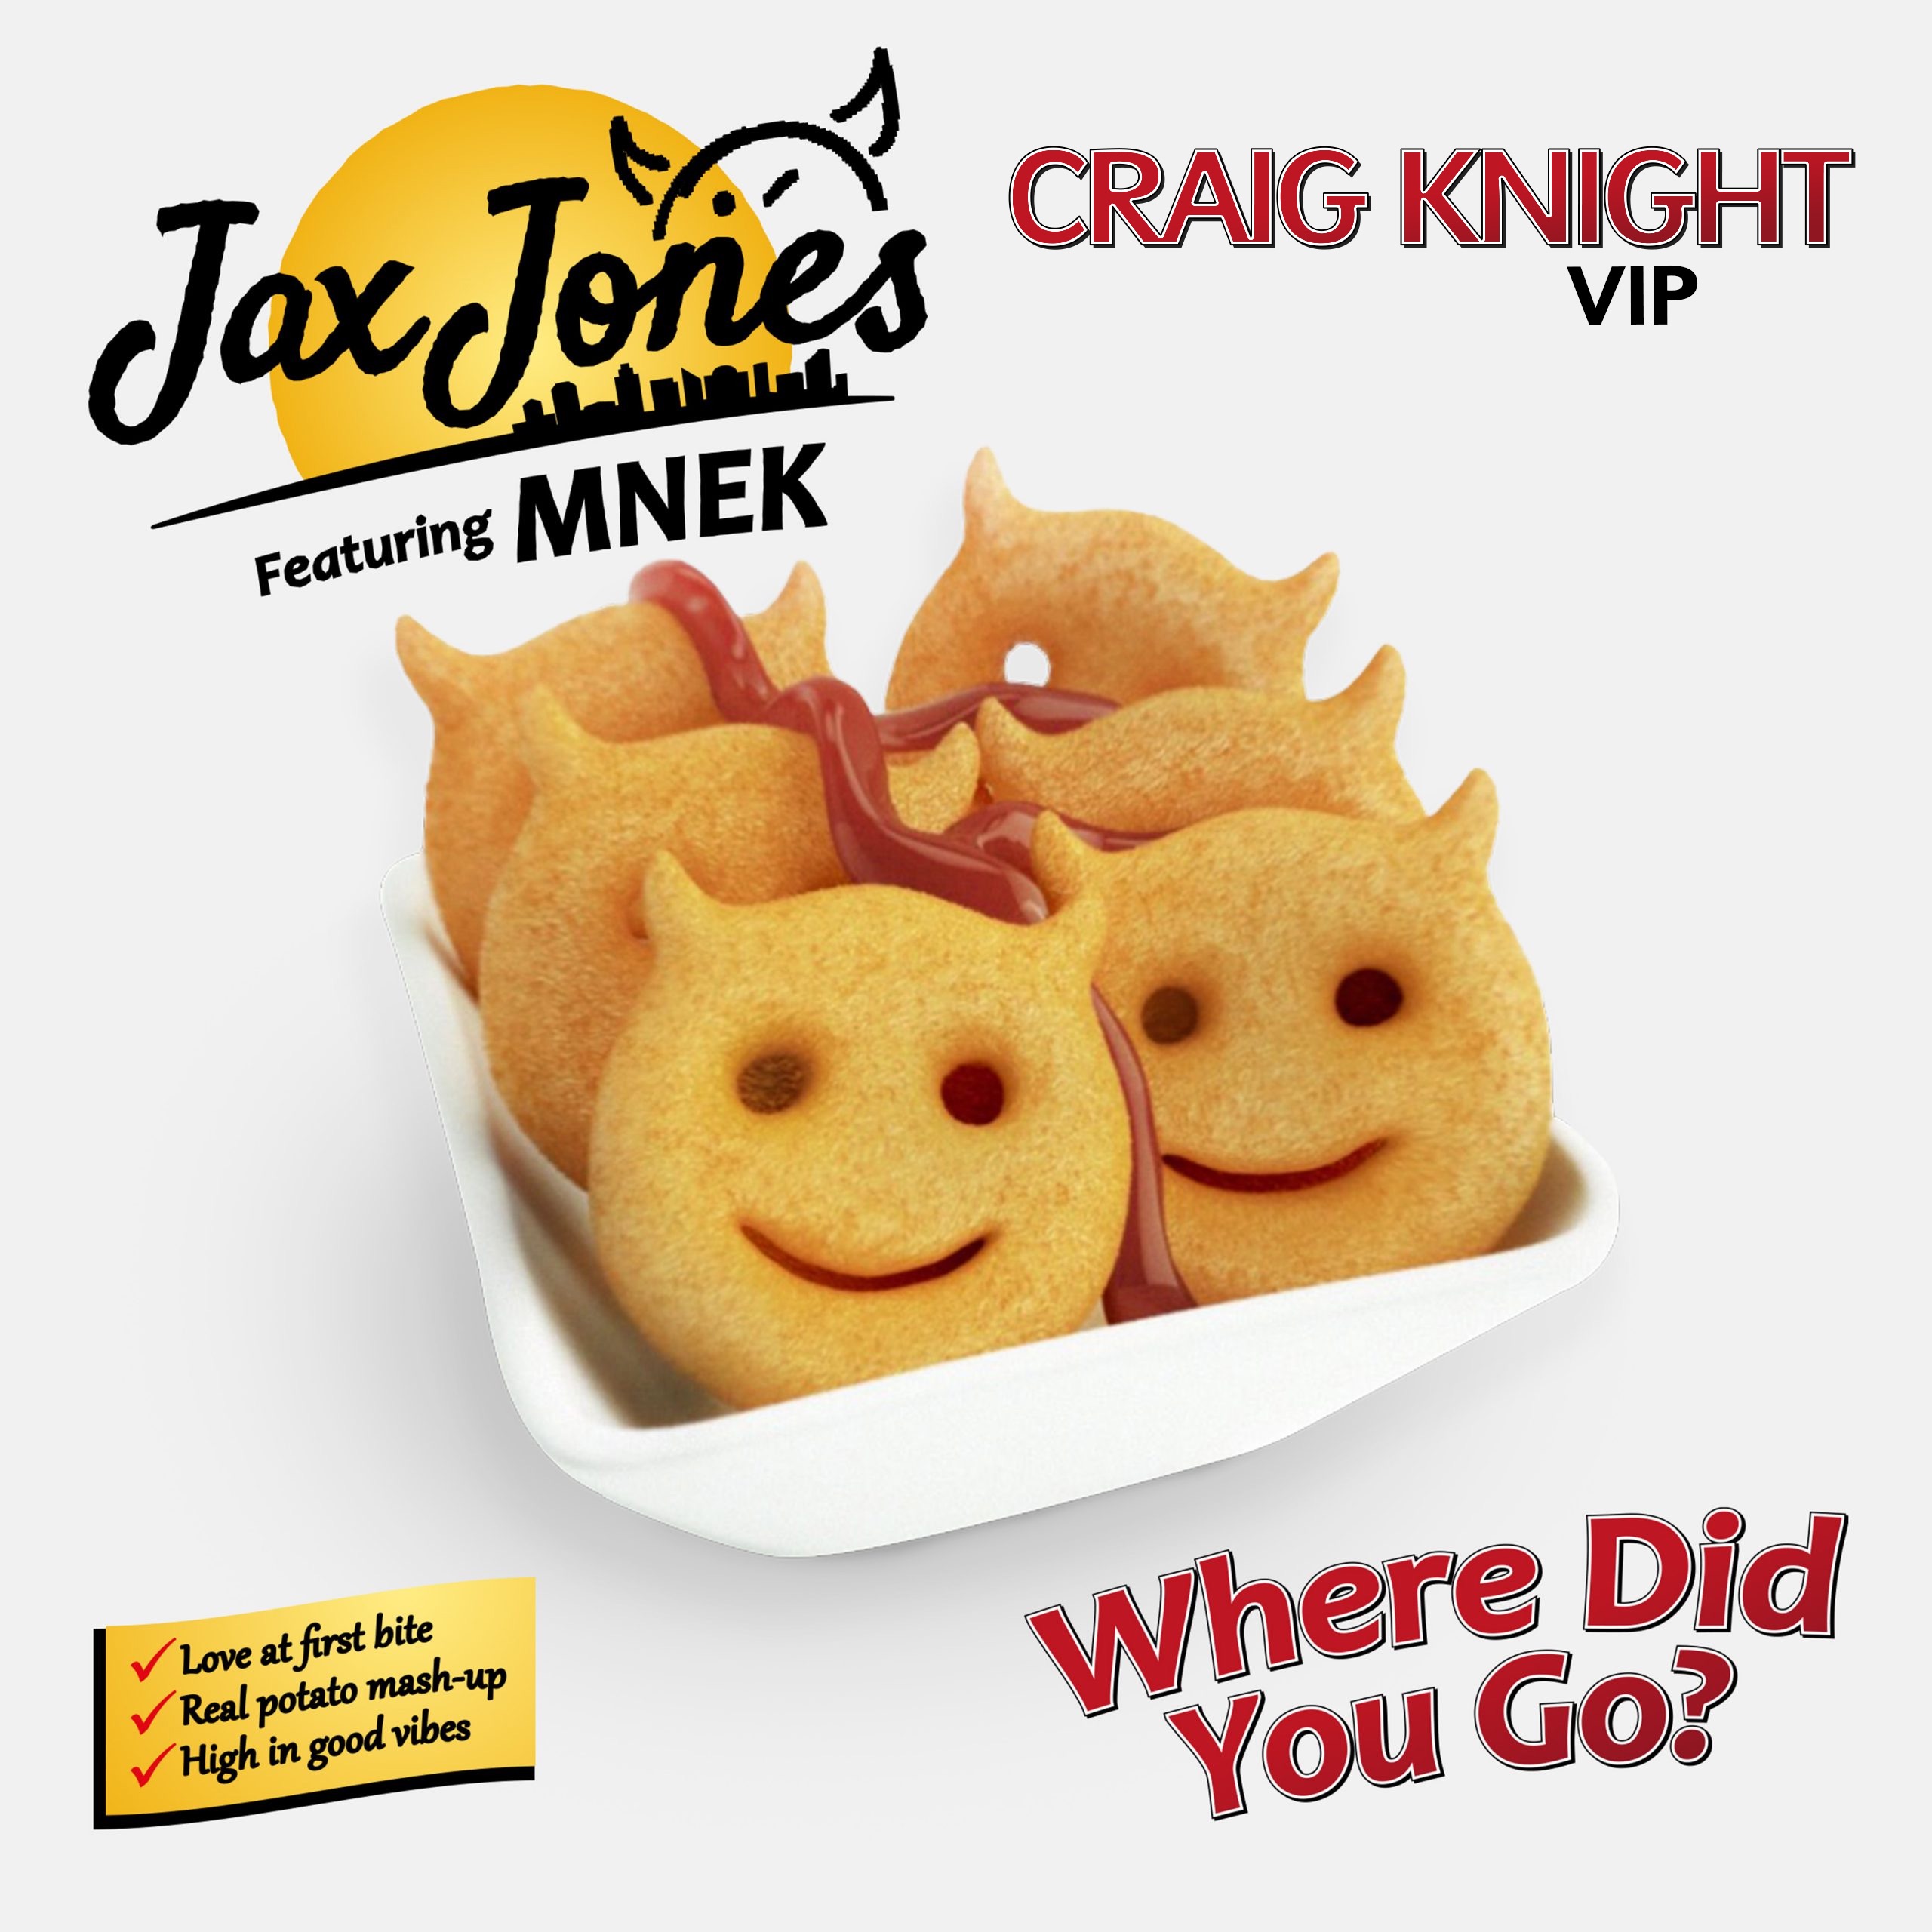 Stiahnuť ▼ Jax Jones Feat. MNEK - Where Did You Go (Craig Knight VIP) ** FREE DOWNLOAD**